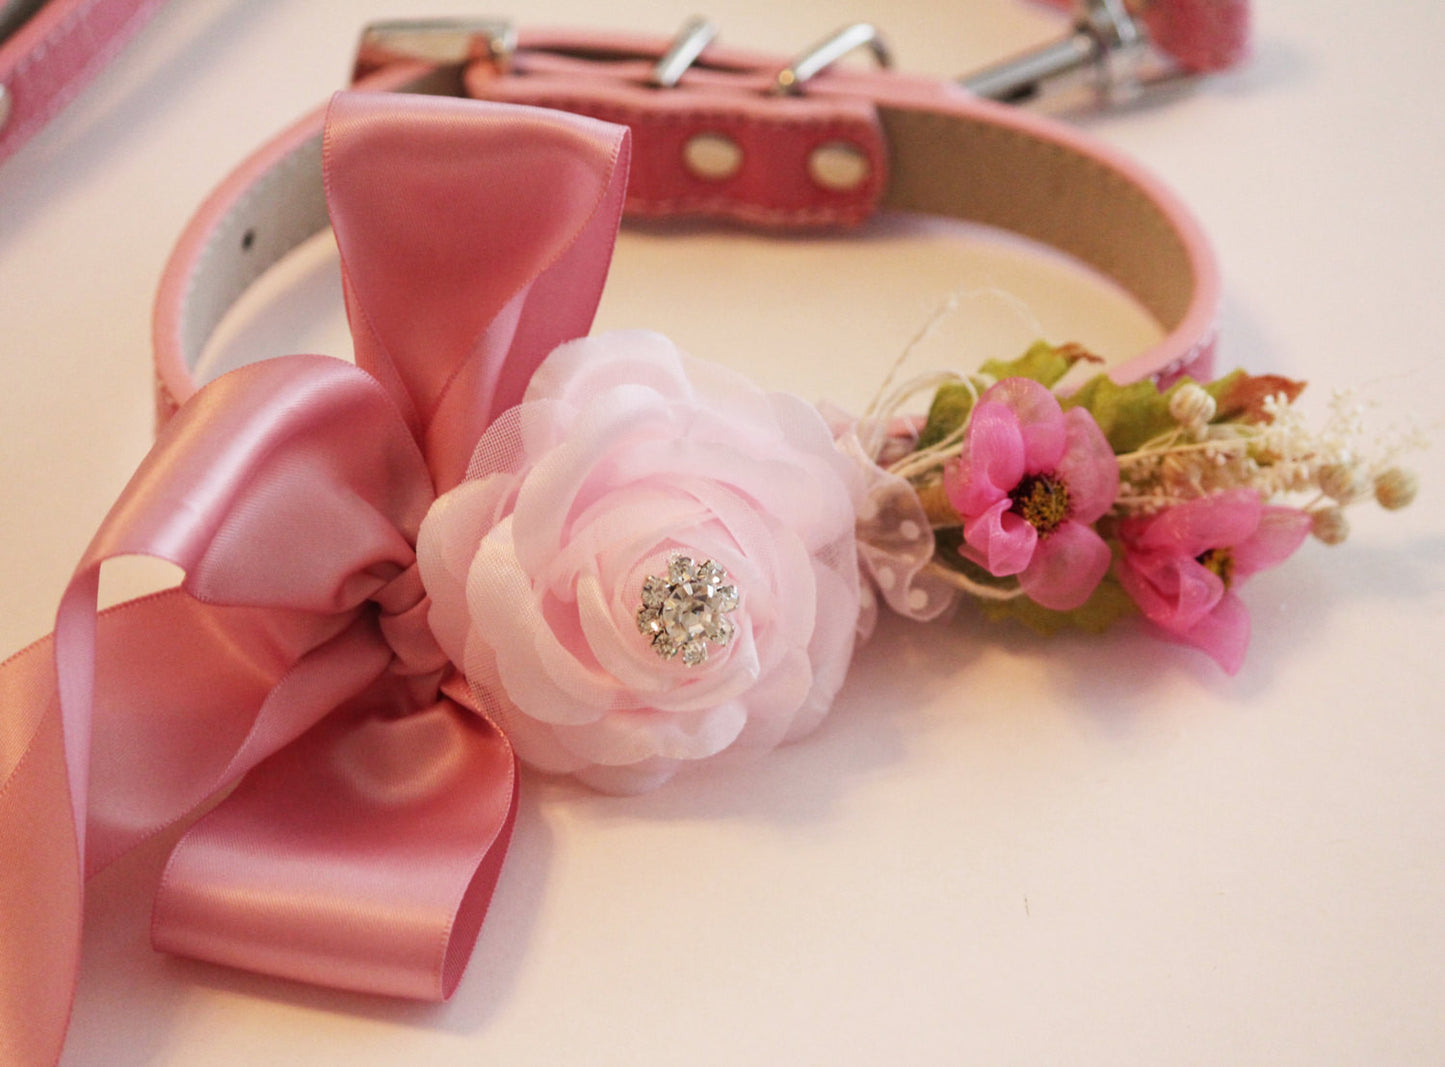 Pink Leash and collar , Pink Pet Wedding accessory, High quality Leather, Pink wedding accessory, Dog Leash and Floral Collar , Wedding dog collar